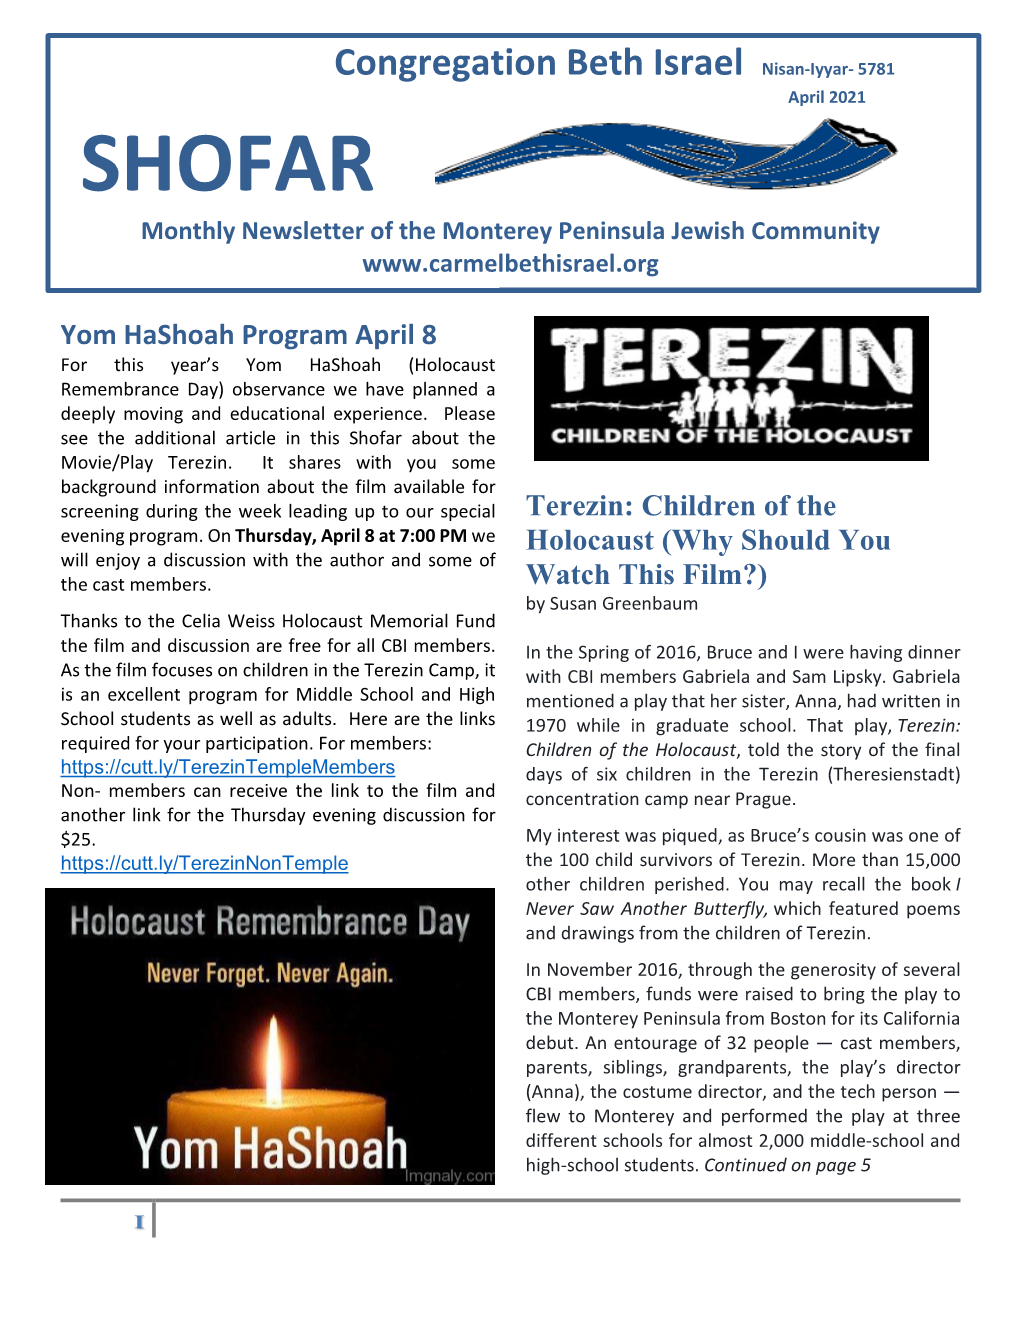 SHOFAR Monthly Newsletter of the Monterey Peninsula Jewish Community